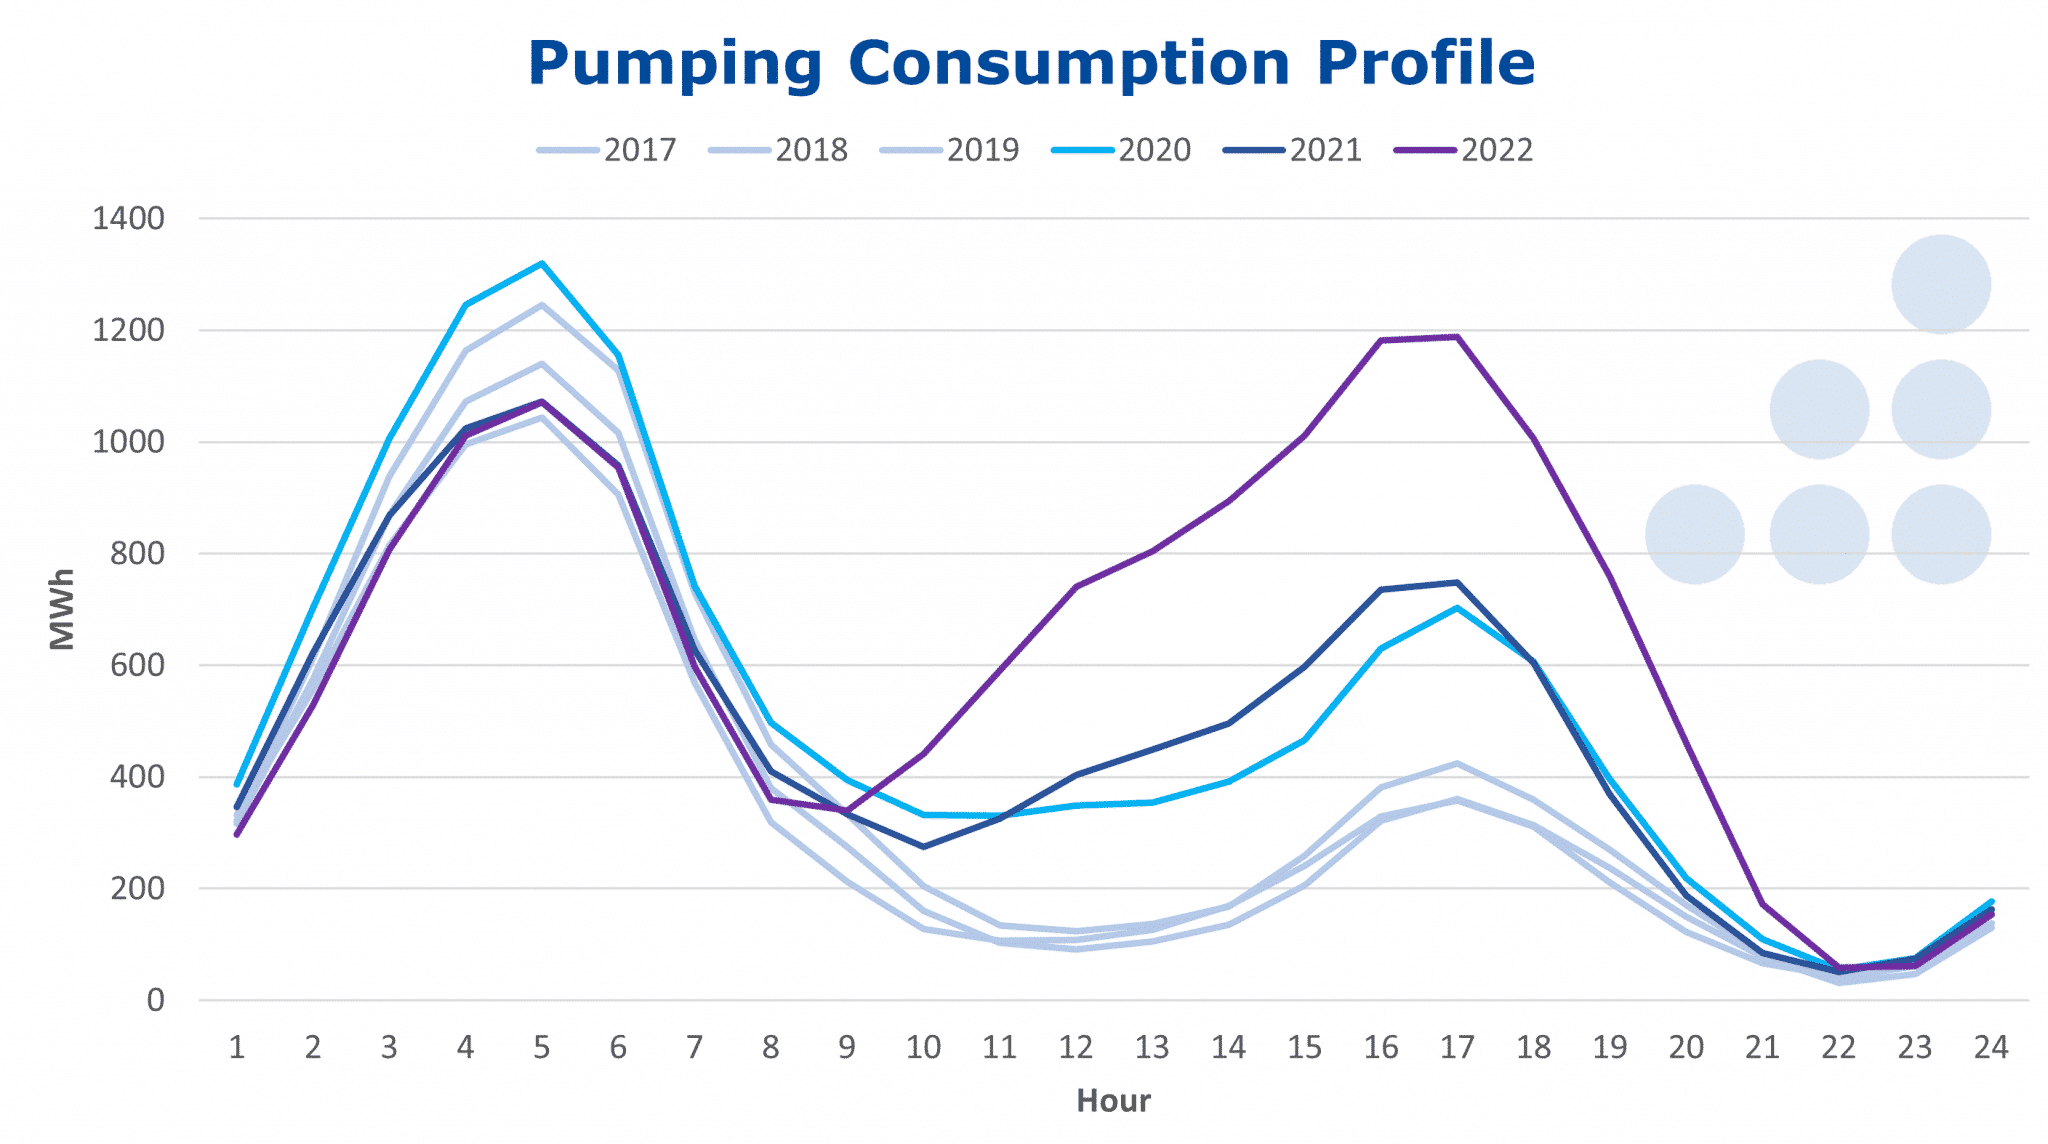 AleaSoft - Pumping consumption profile